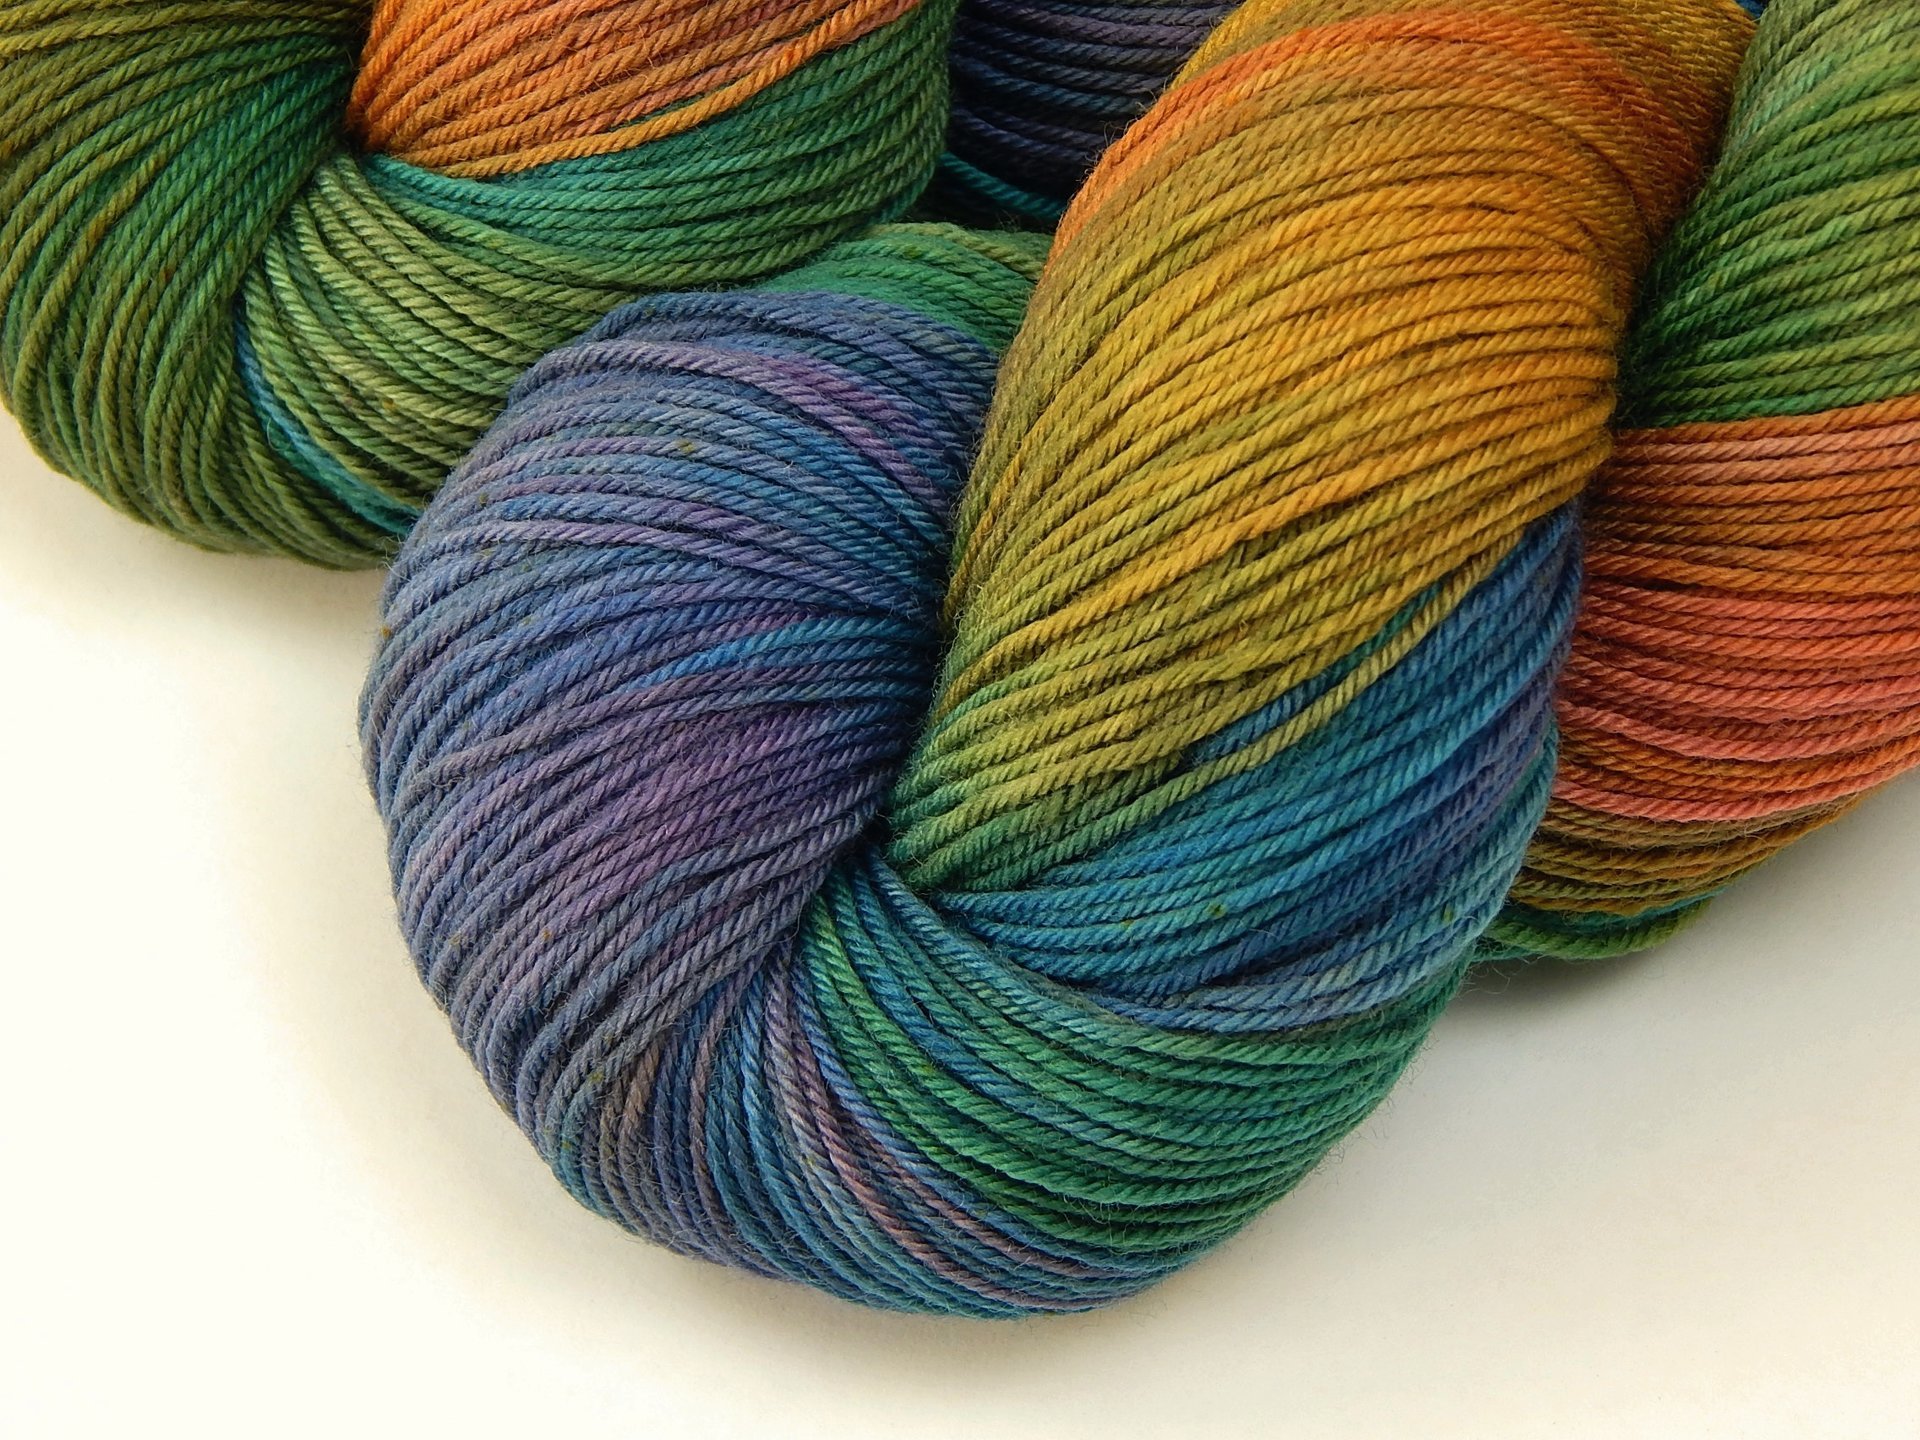 Hand Dyed Yarn, Fingering Sock Weight 4 Ply Superwash Merino Wool - Potluck Rainbow - Indie Dyer Colorful OOAK Knitting Yarn 